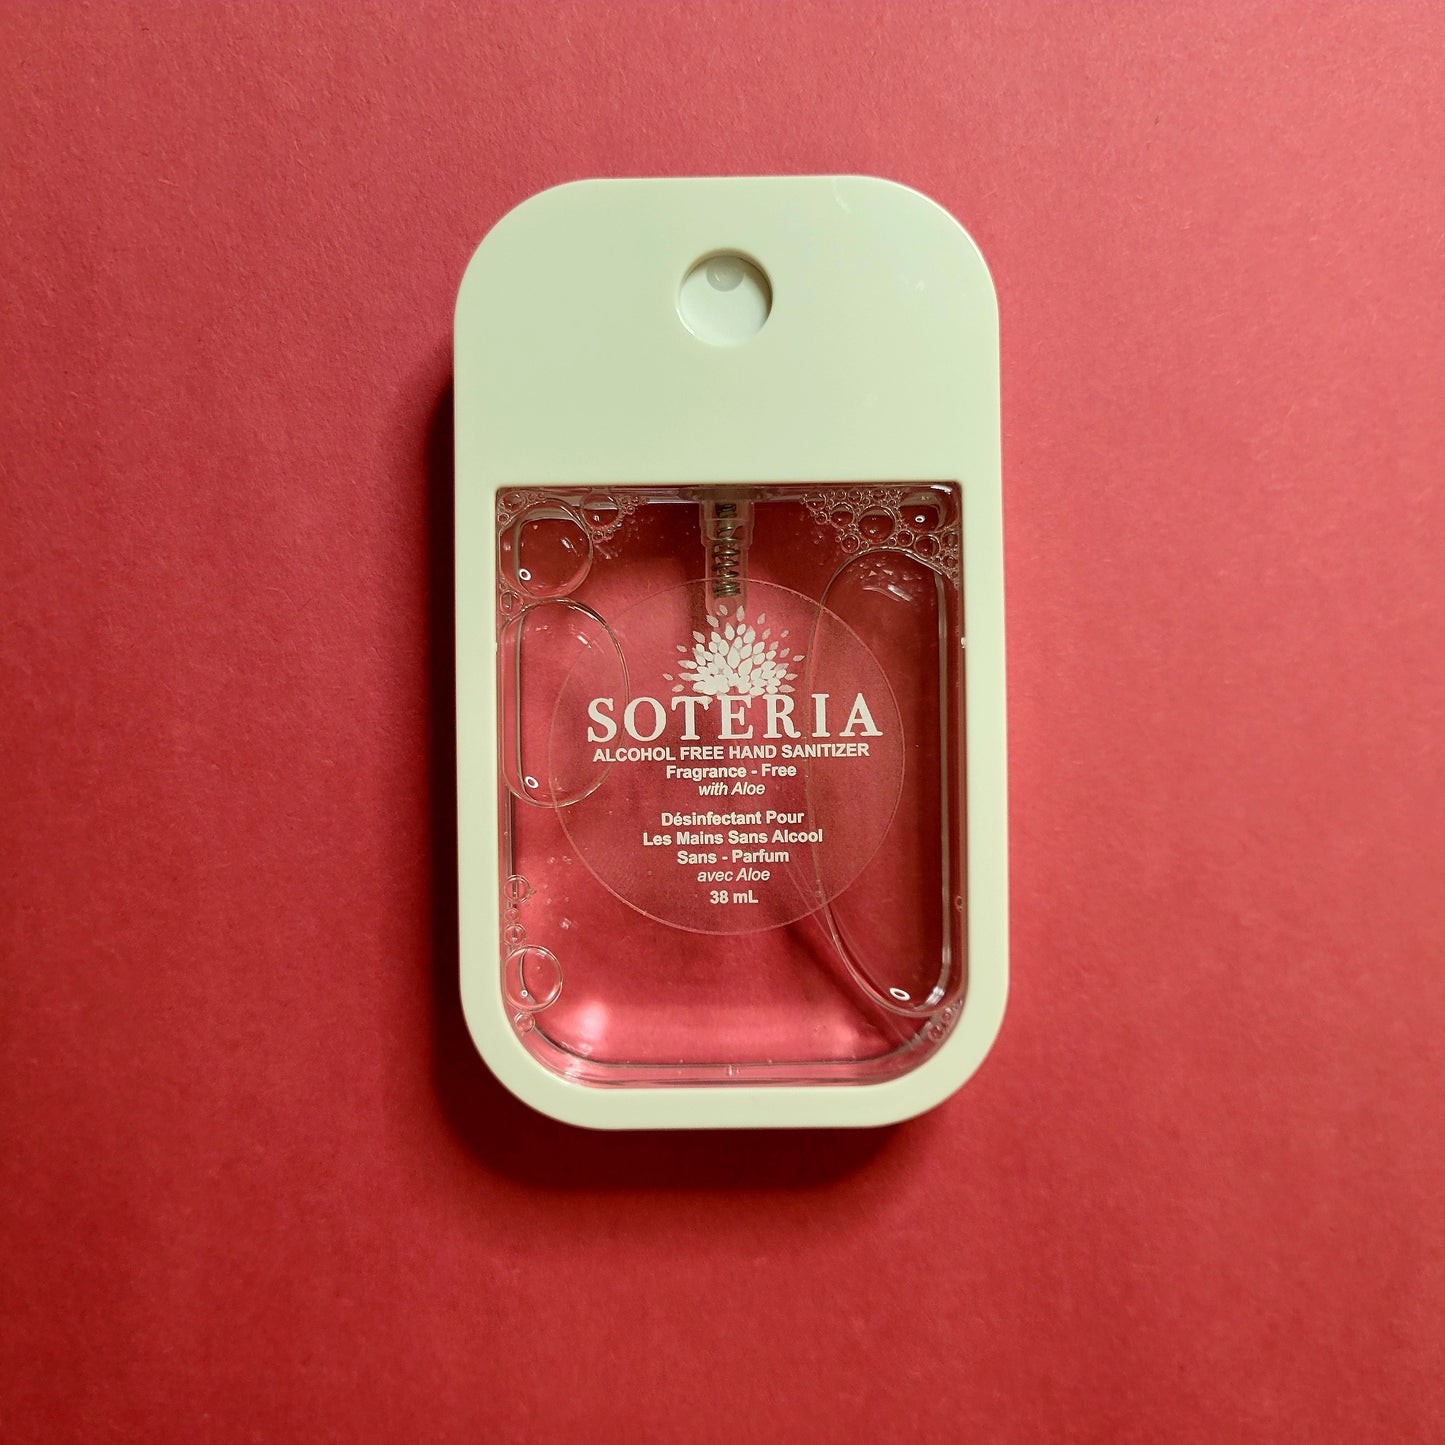 SOTERIA Alcohol-free Hand Sanitizer Spray 38mL